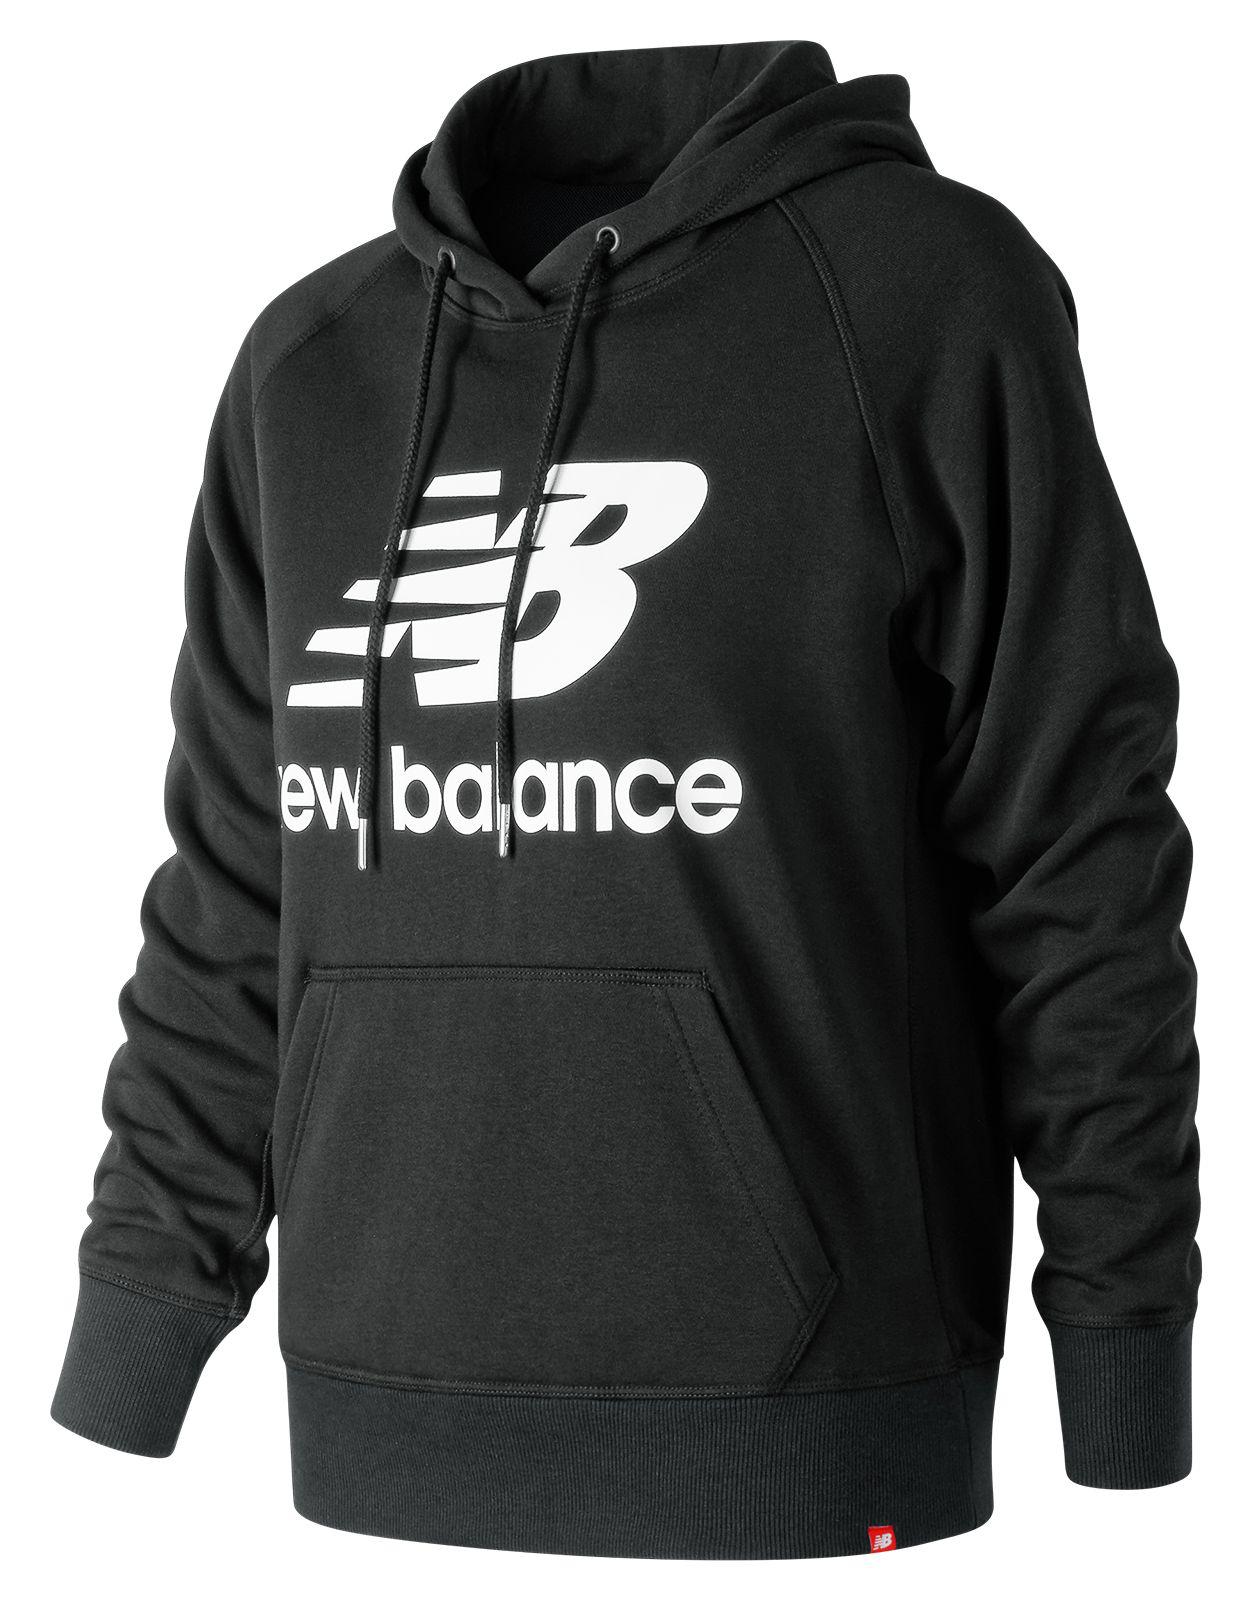 Lyst - New Balance Essentials Pullover Hoodie in Black